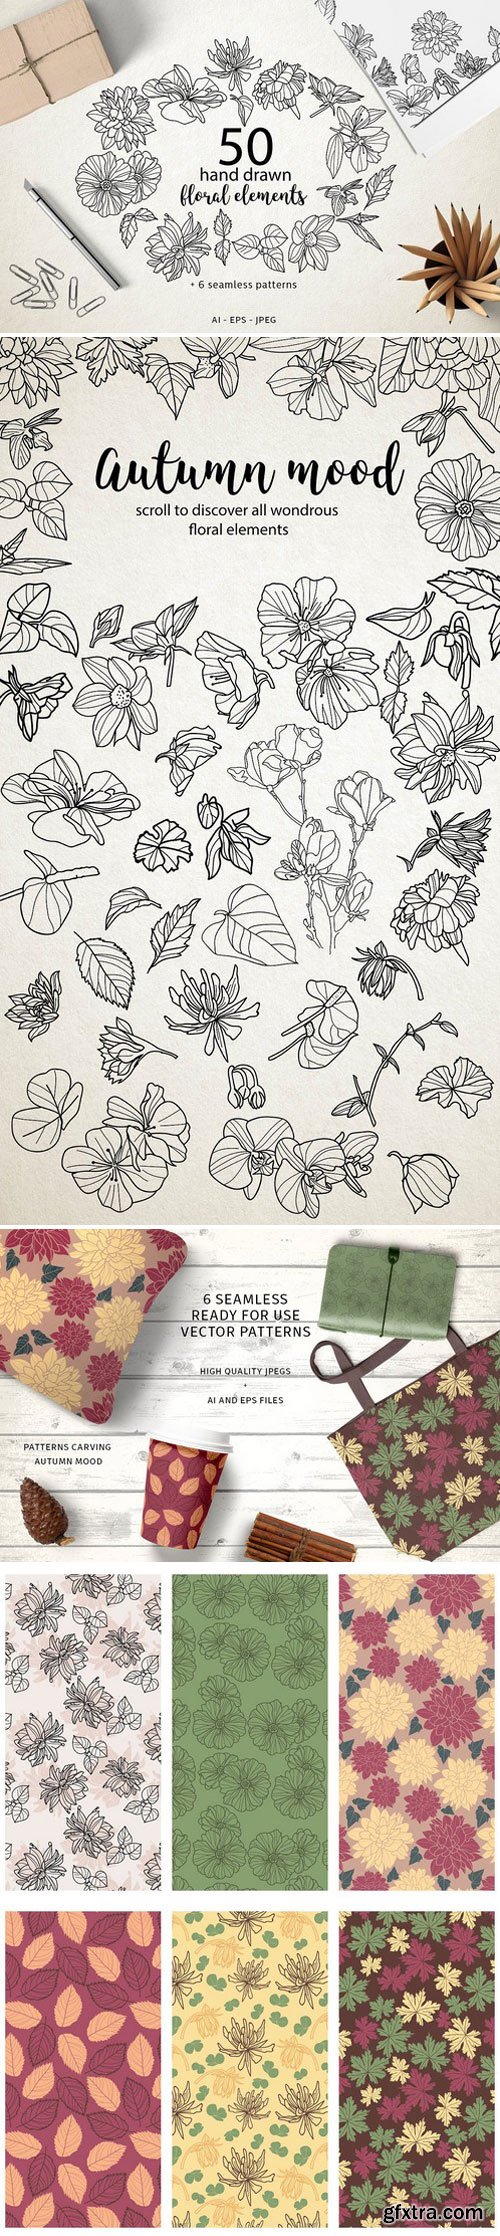 CM - 50 hand drawn floral elements 1991307